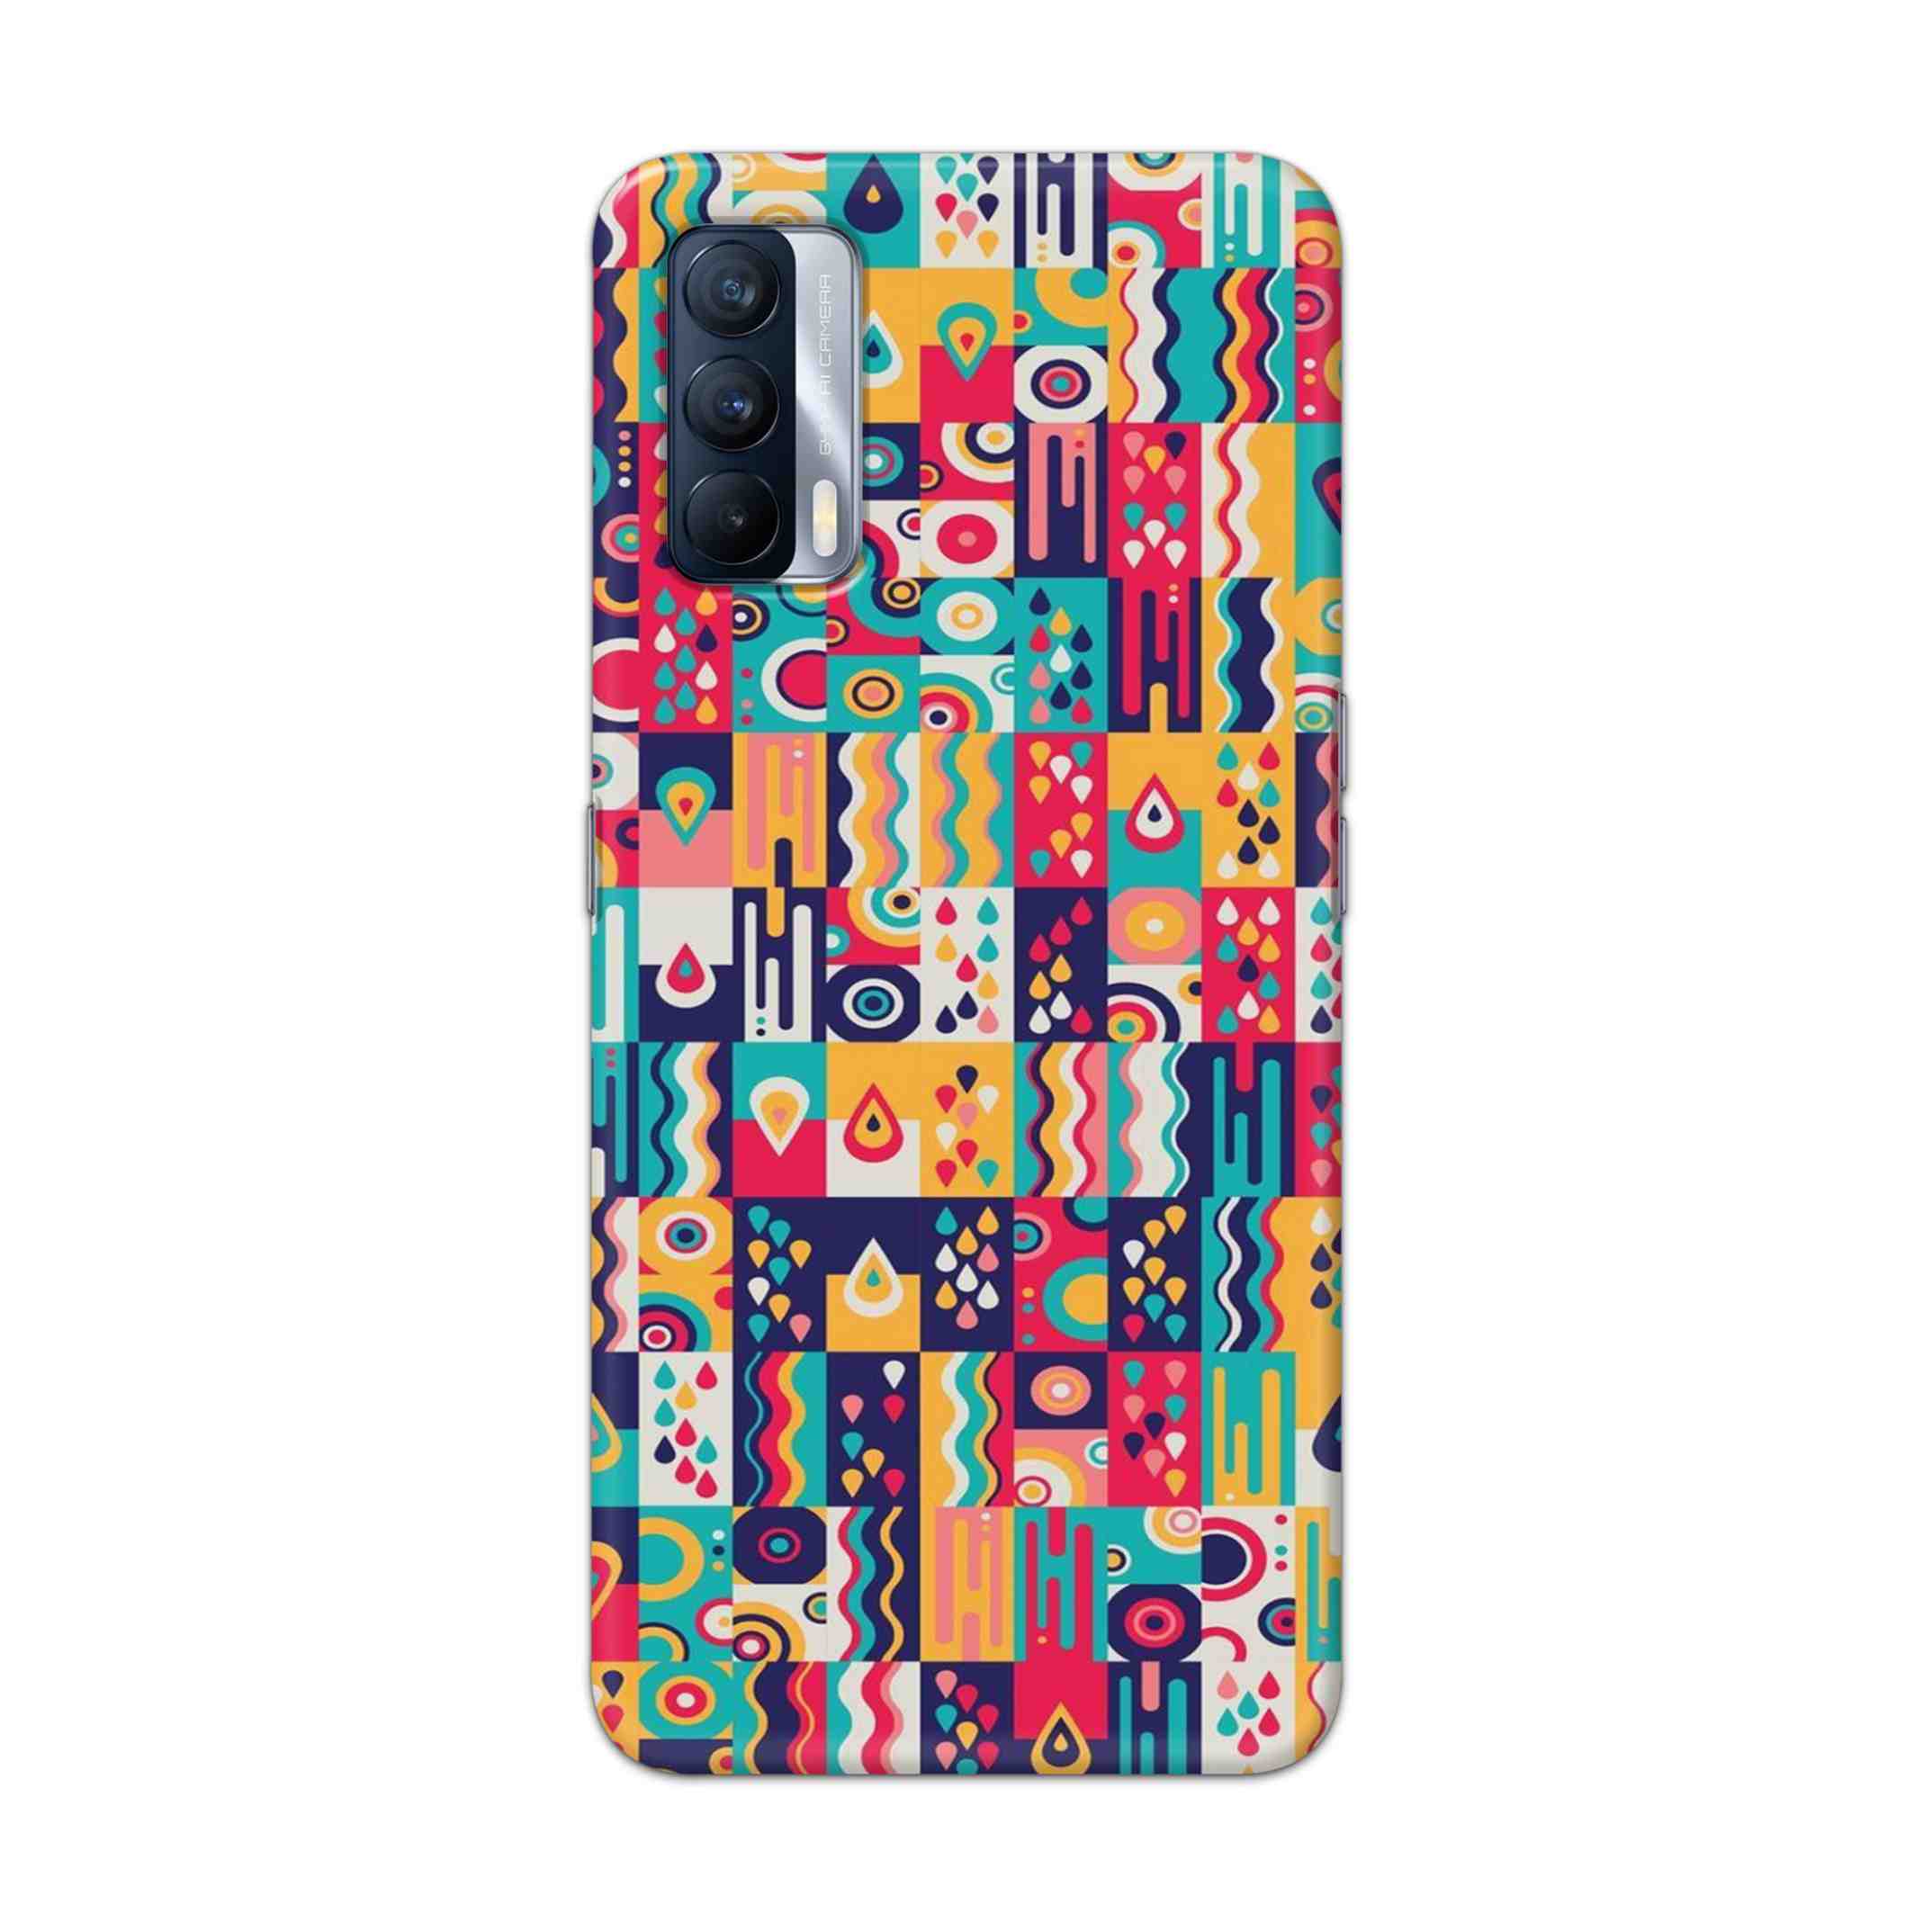 Buy Art Hard Back Mobile Phone Case Cover For Realme X7 Online